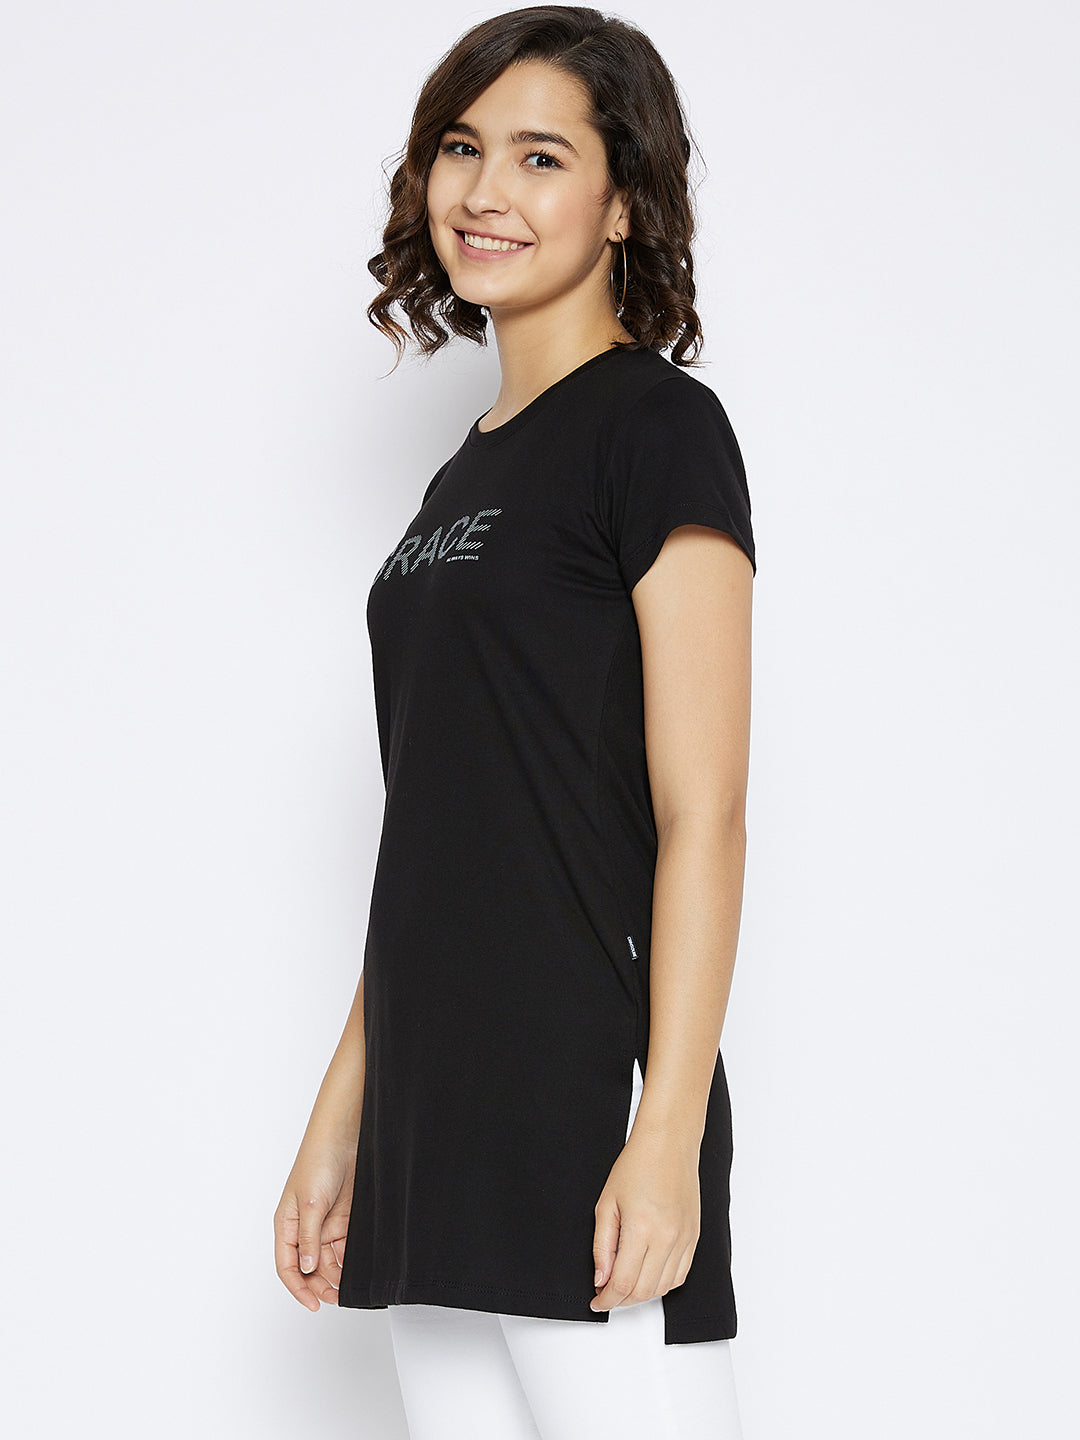 Black Printed Round Neck T-shirt - Women T-Shirts